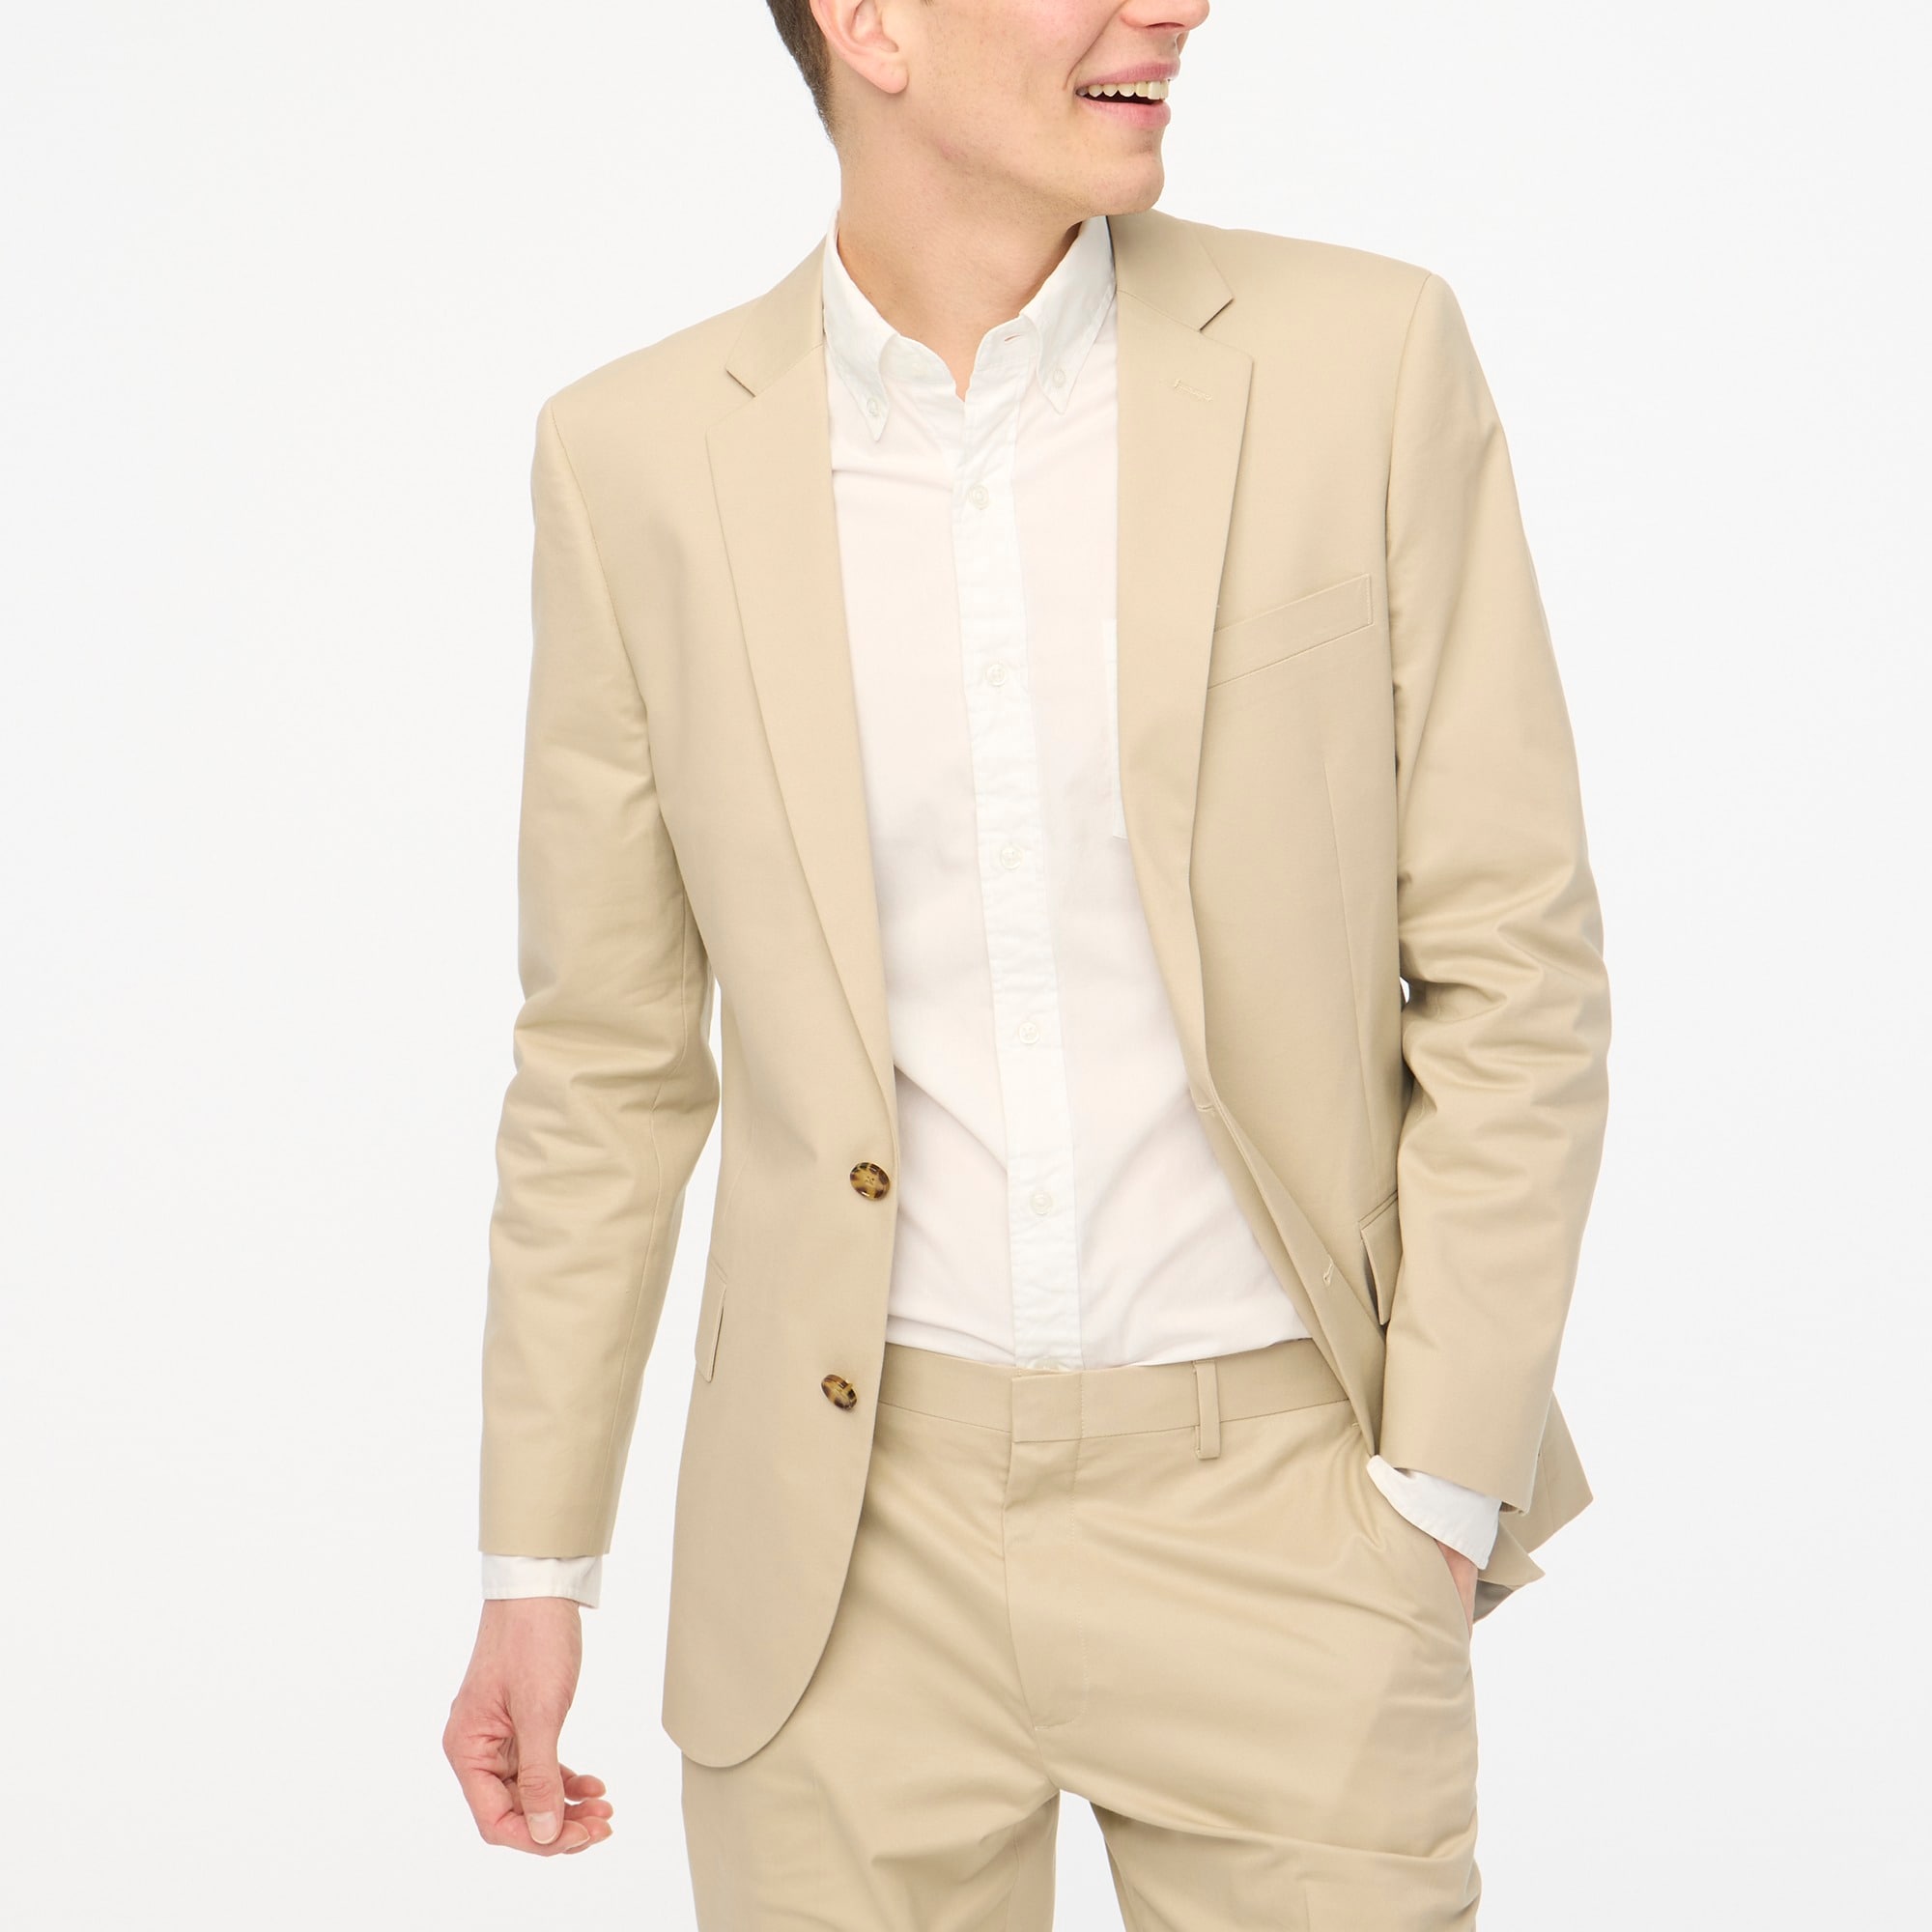 Jcrew Stretch suit jacket in flex chino